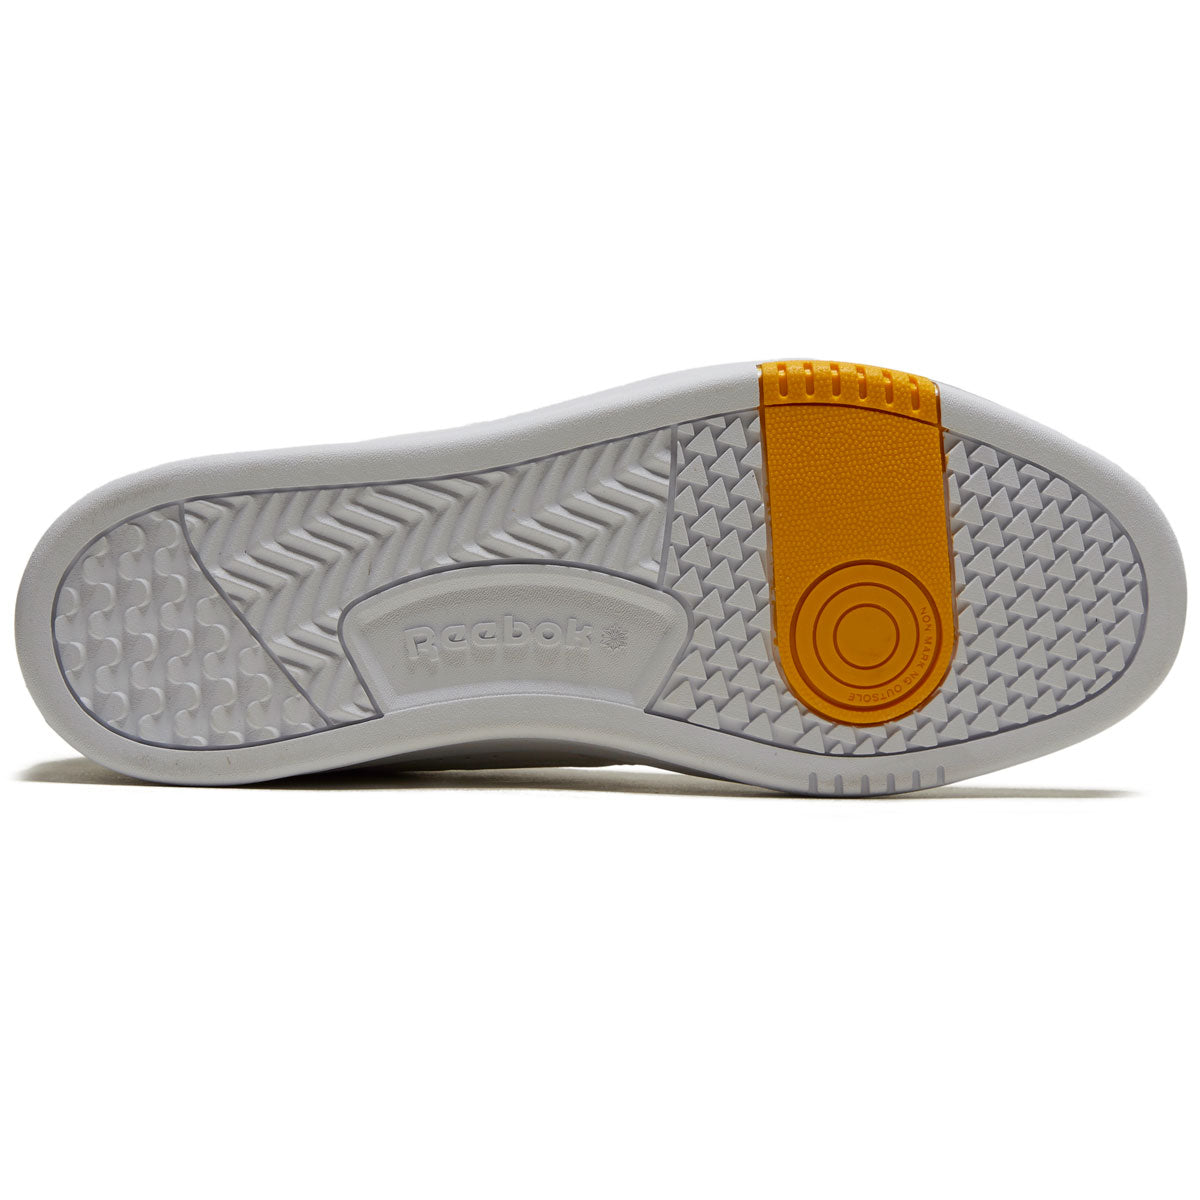 Reebok LT Court Shoes - White/Black/Yellow image 4